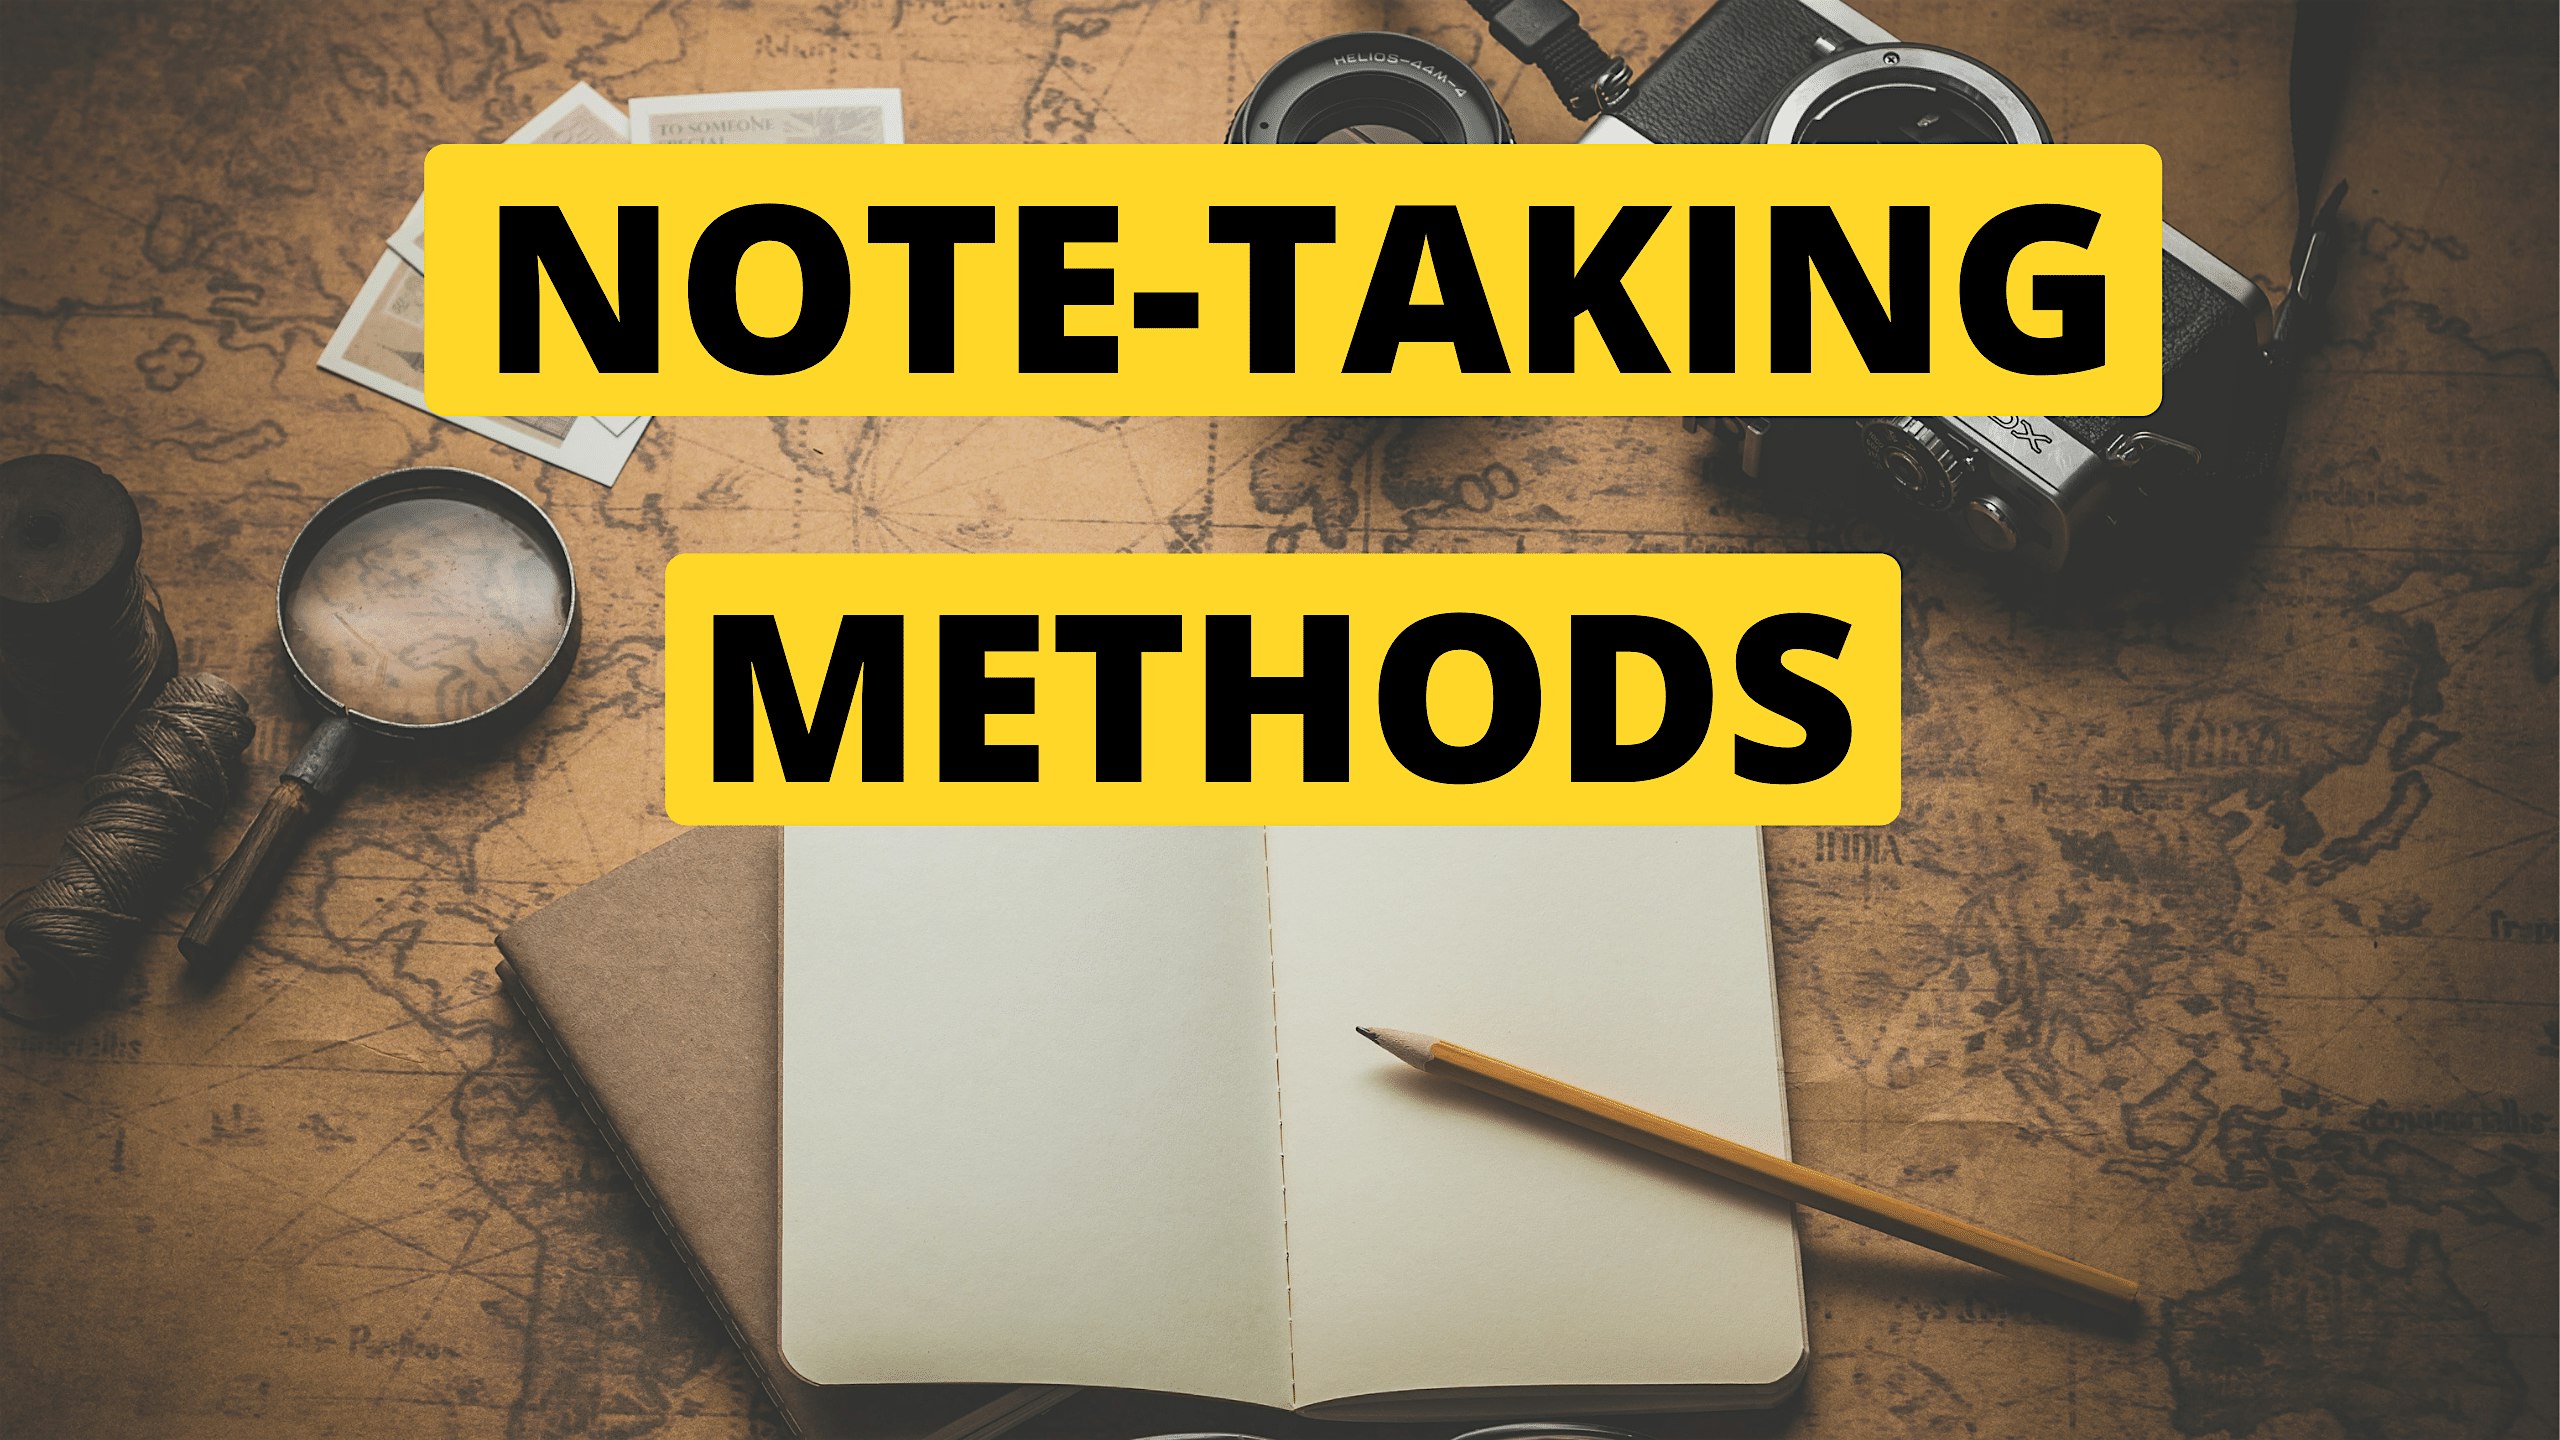 Note-Taking Strategies & Methods -  Kolkata, 15 August | Event in Kolkata | AllEvents.in